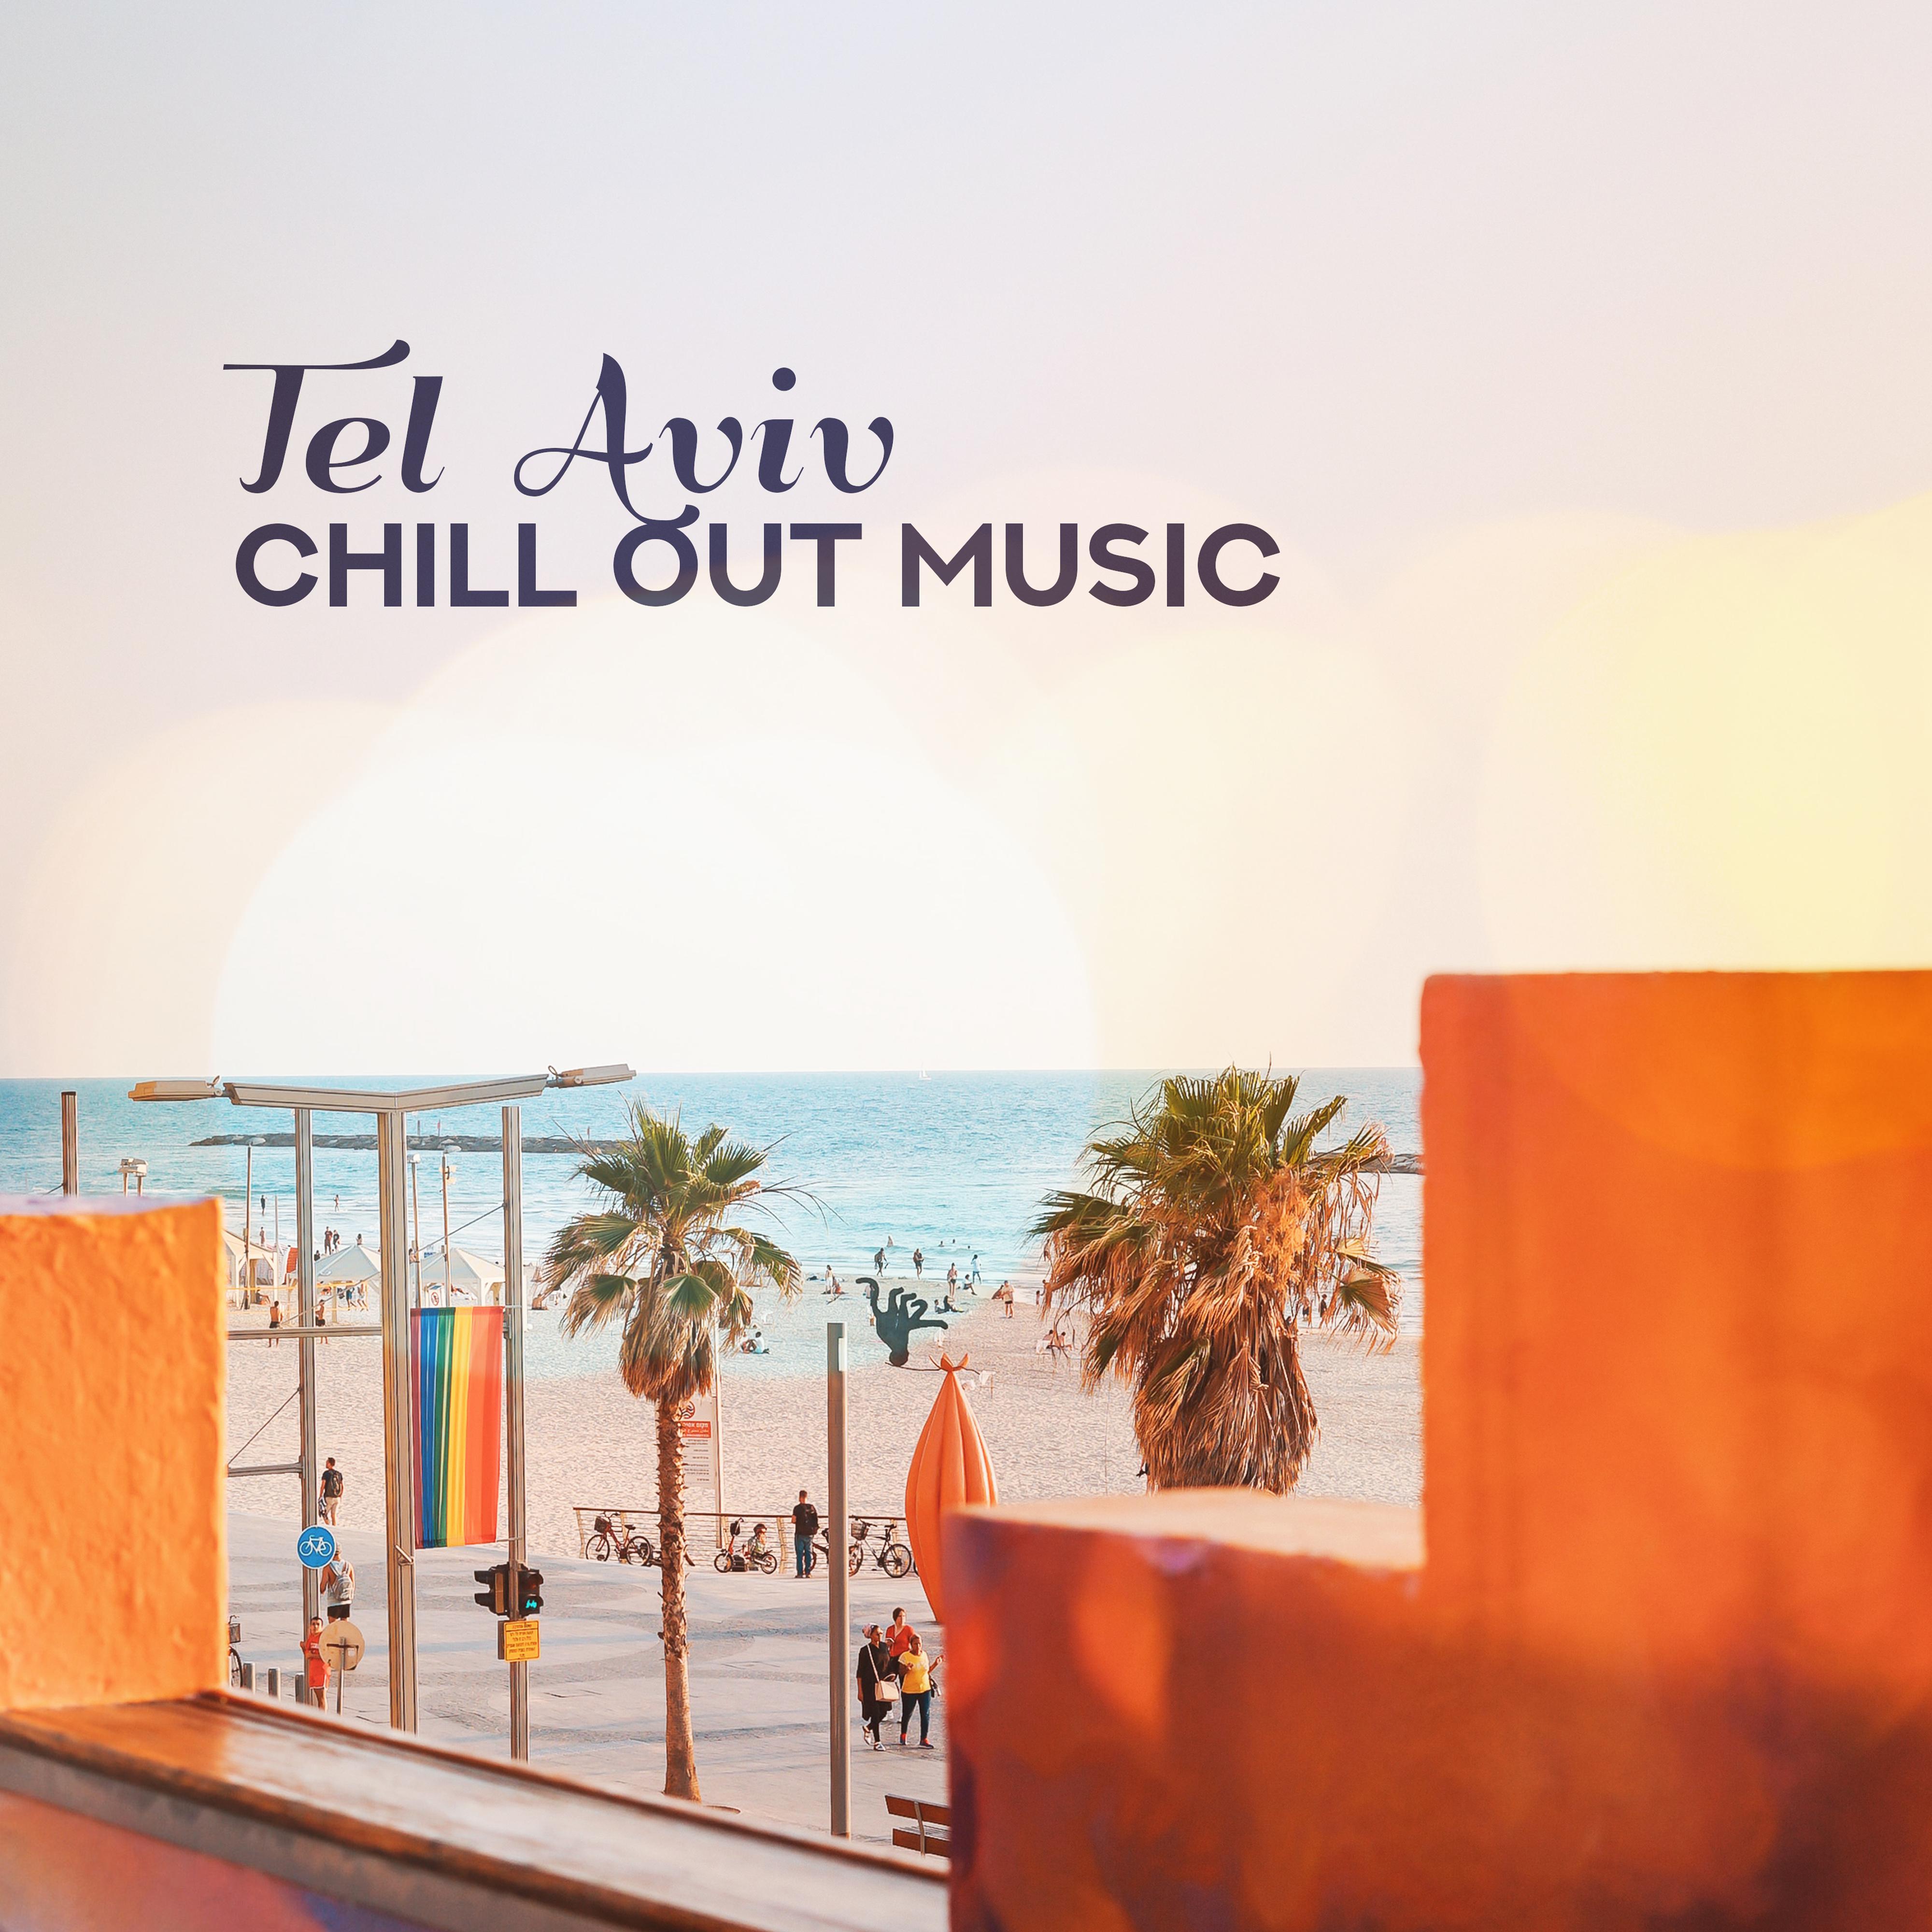 Tel Aviv Chill Out Music